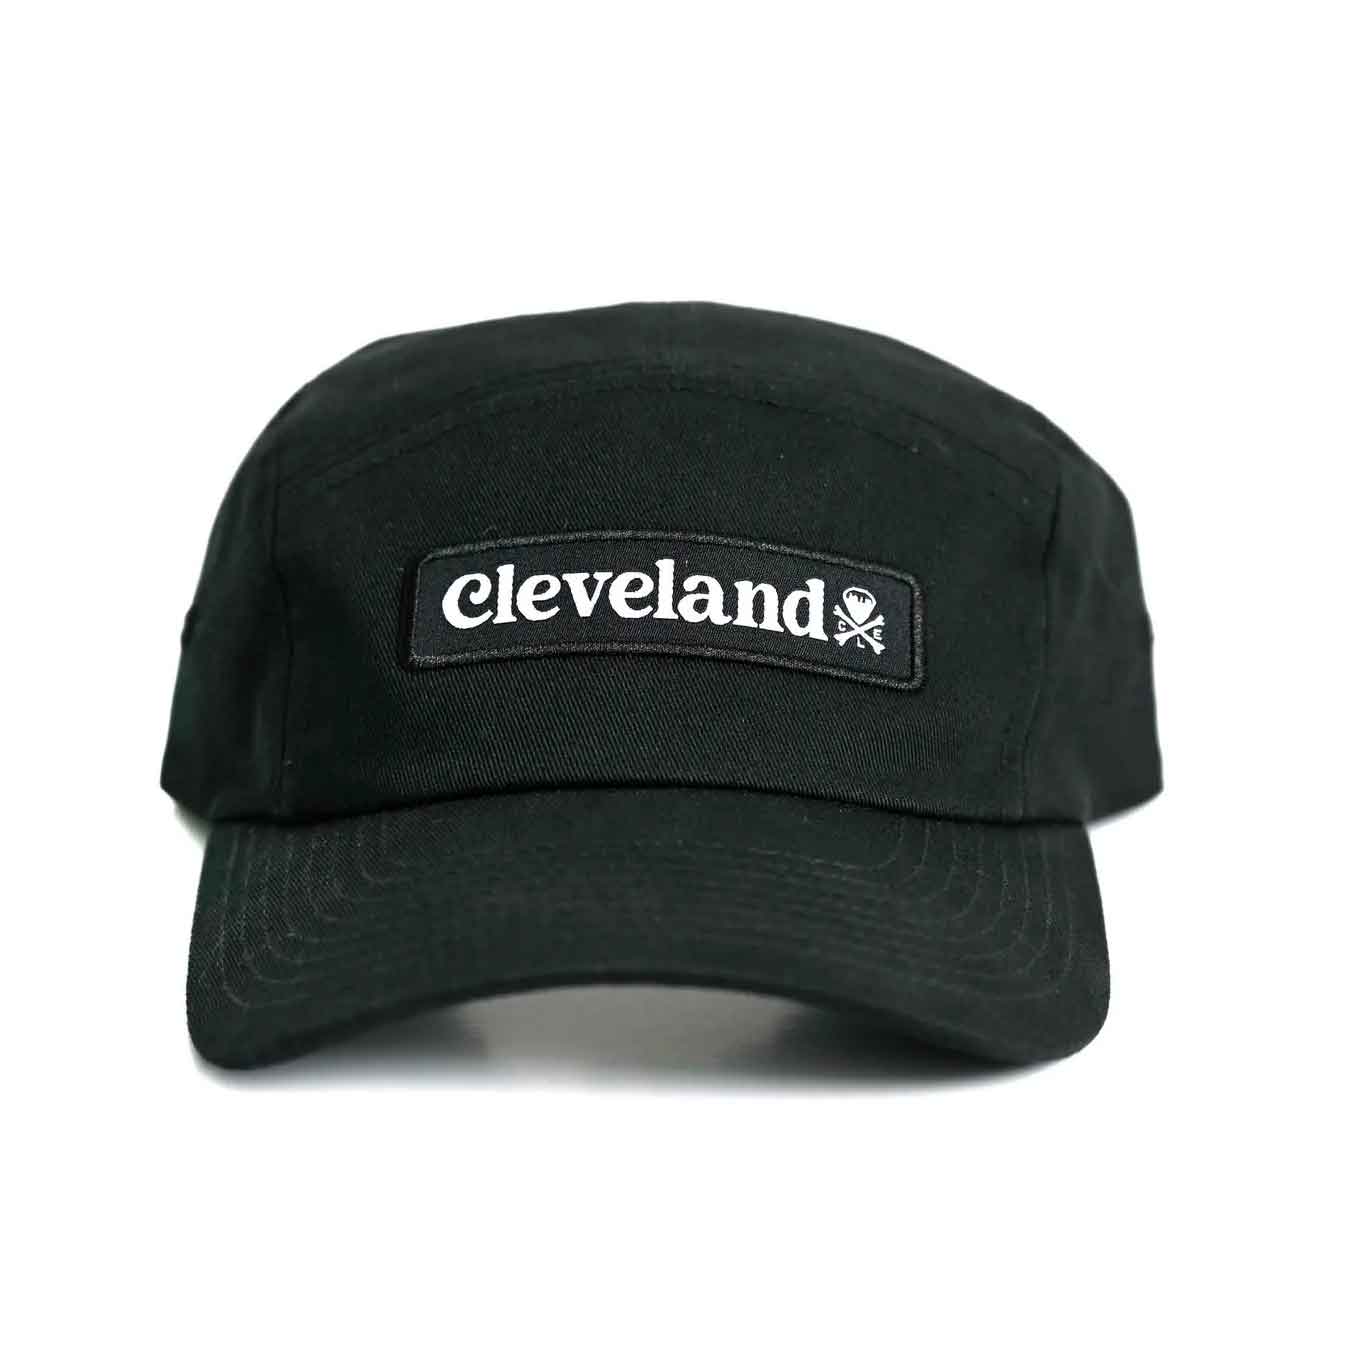 Cleveland Retro Type 5 Panel Hat - Black